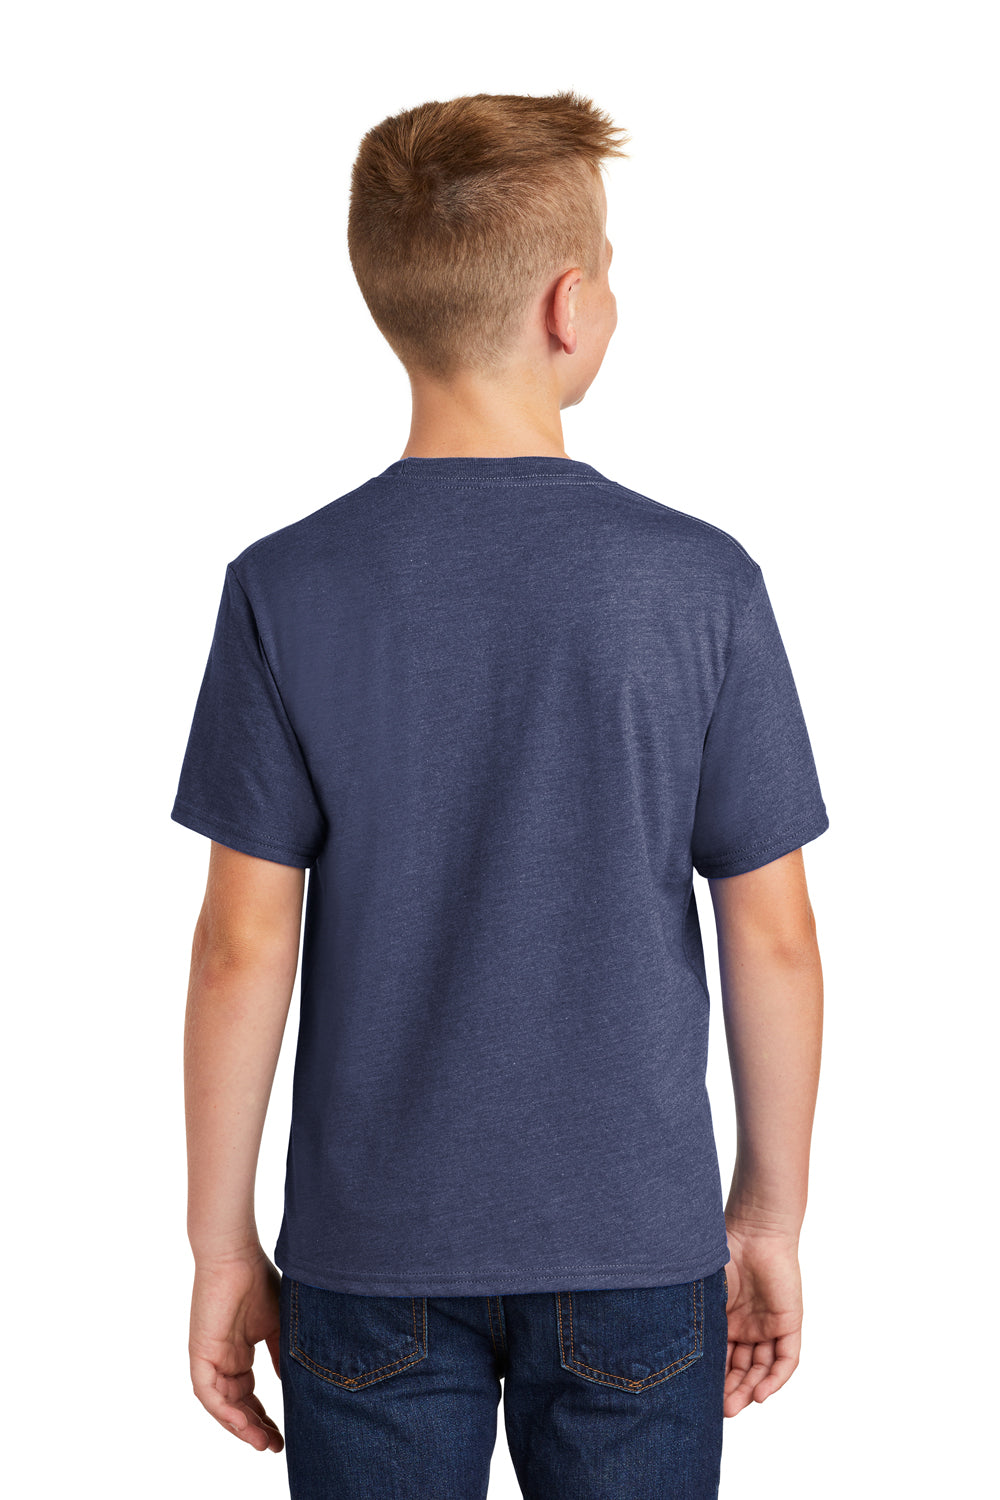 Port & Company PC455Y Youth Fan Favorite Short Sleeve Crewneck T-Shirt Heather Navy Blue Back